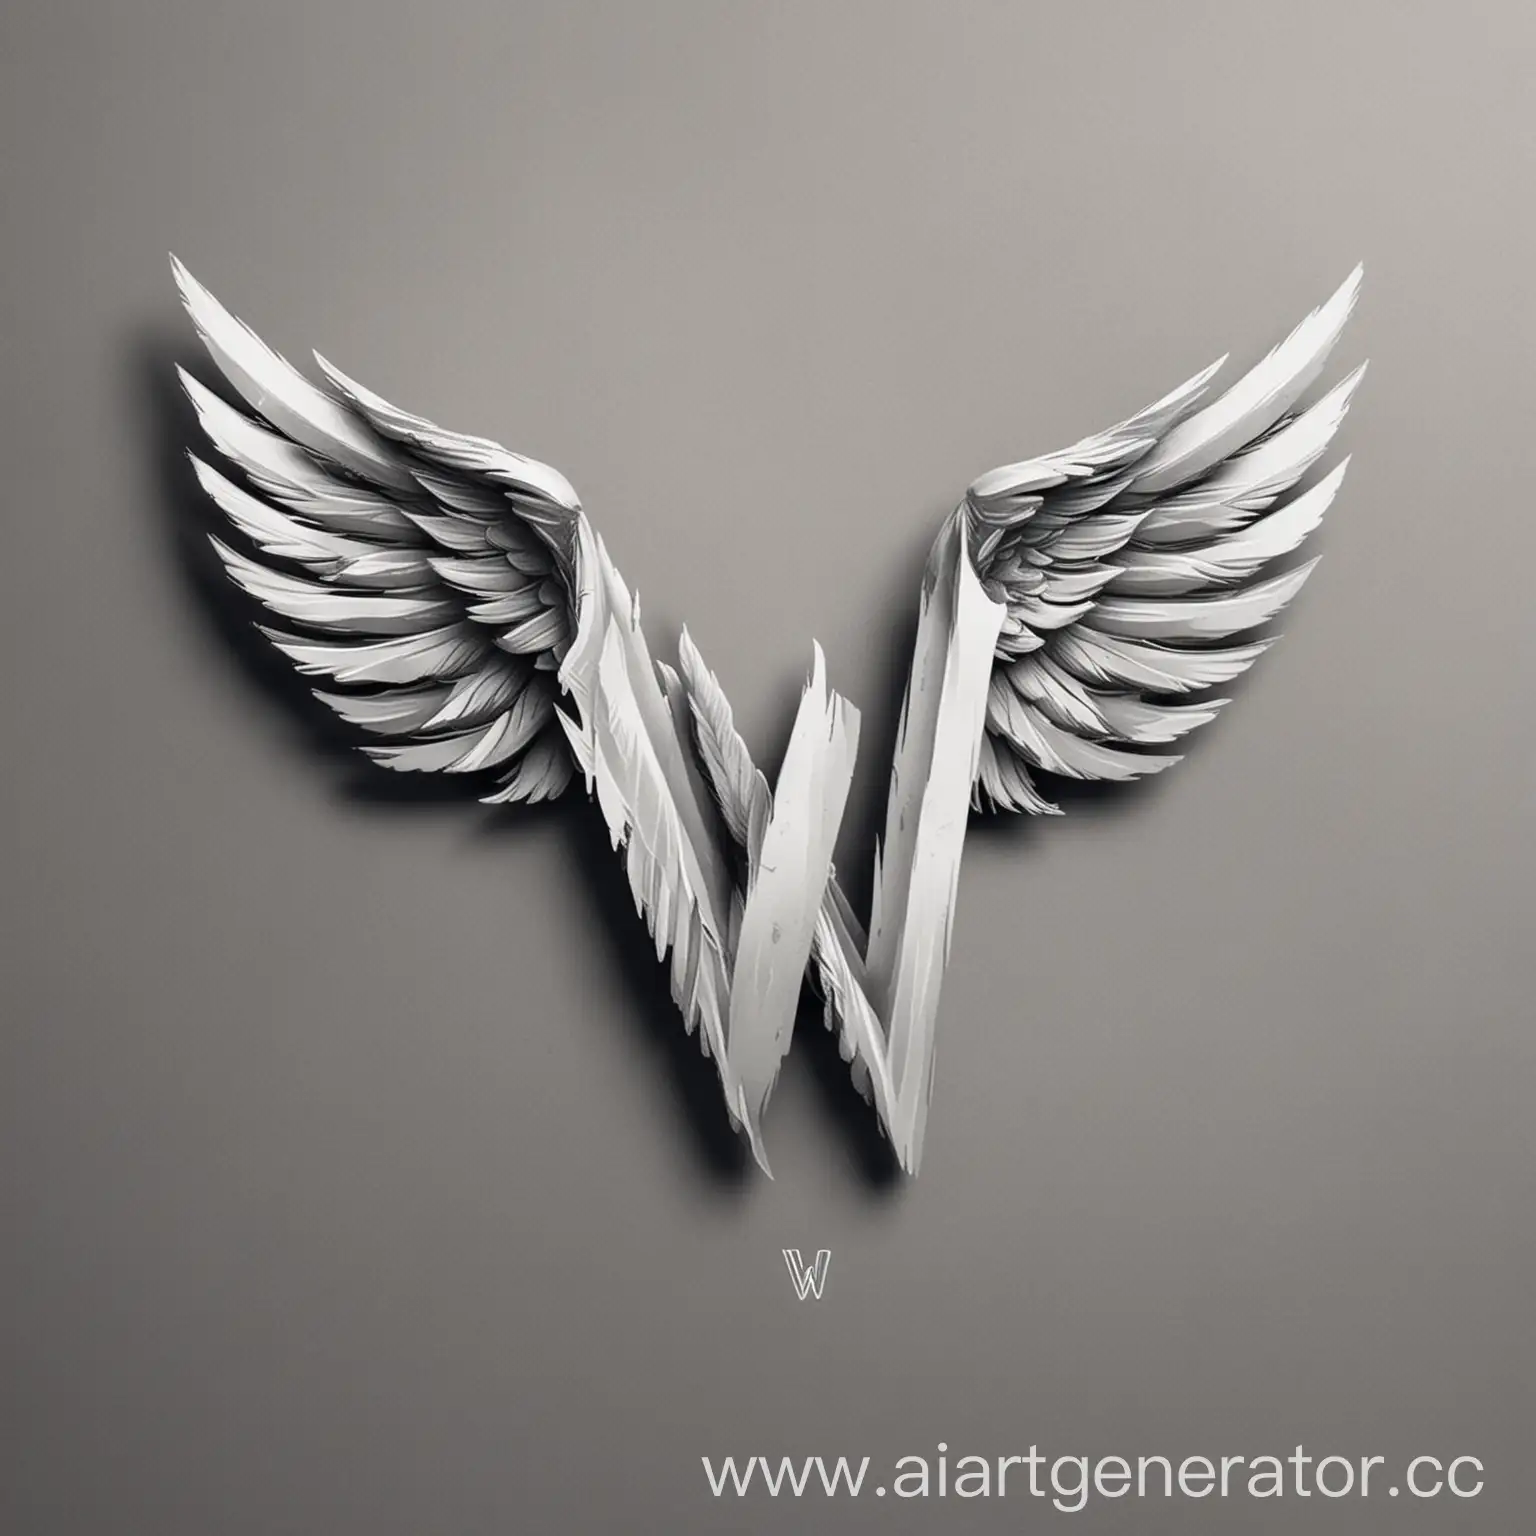 Логотип Wings, Серые крылья а на них буква W